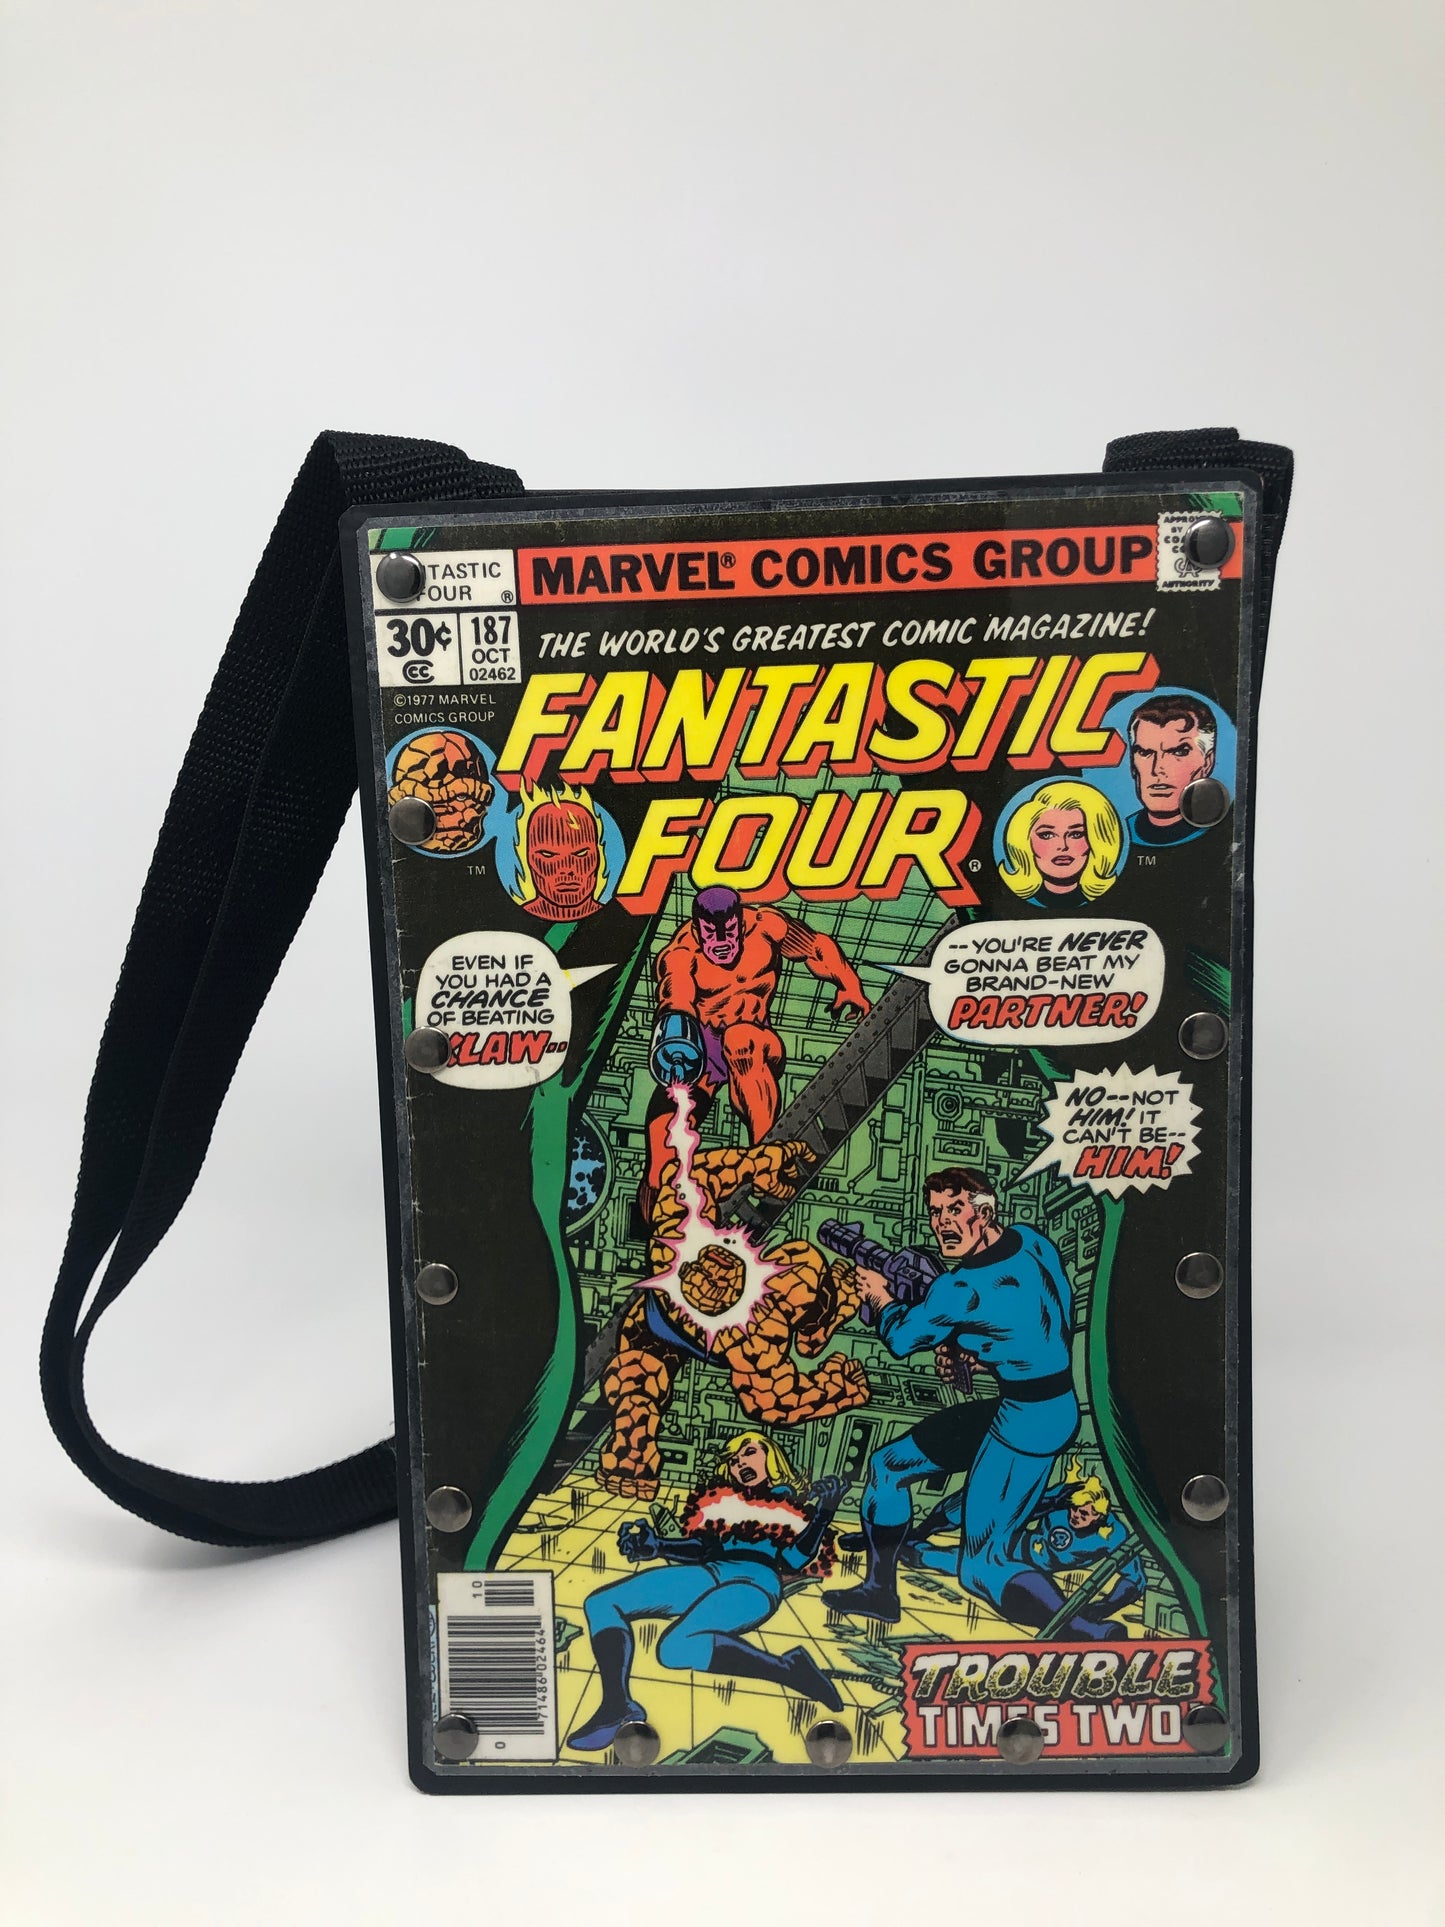 Clearance Corner Vintage Comic Book Purse - Fantastic Four October 1977